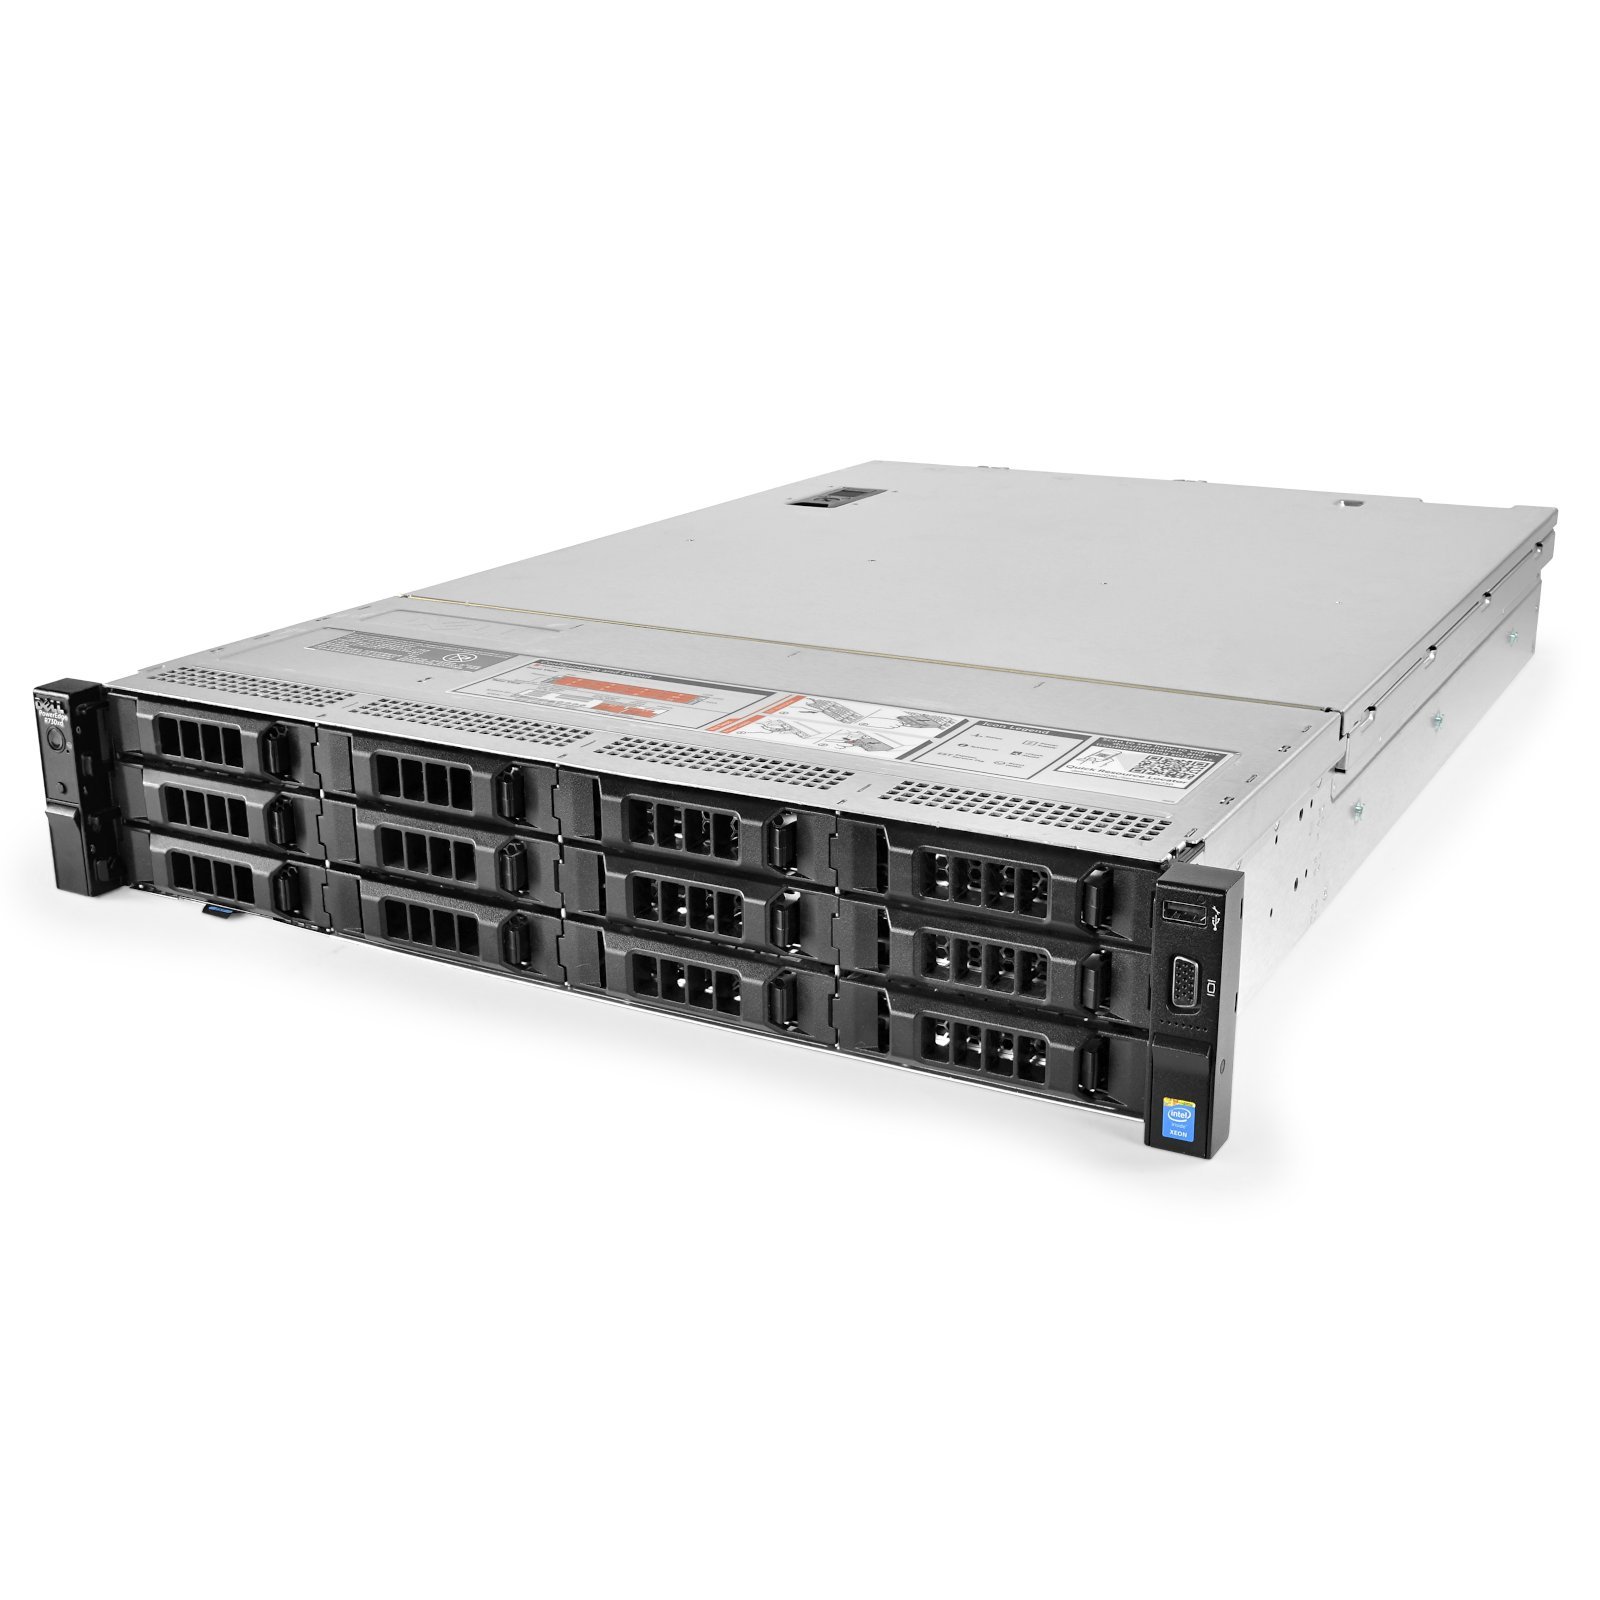 Подробное фото Сервер DELL PowerEdge R730XD 2x Xeon E5-2699v3 128Gb 2133P DDR4 12x noHDD 3.5" SAS RAID Perc H730 mini, 1024Mb, 2*PSU 750W